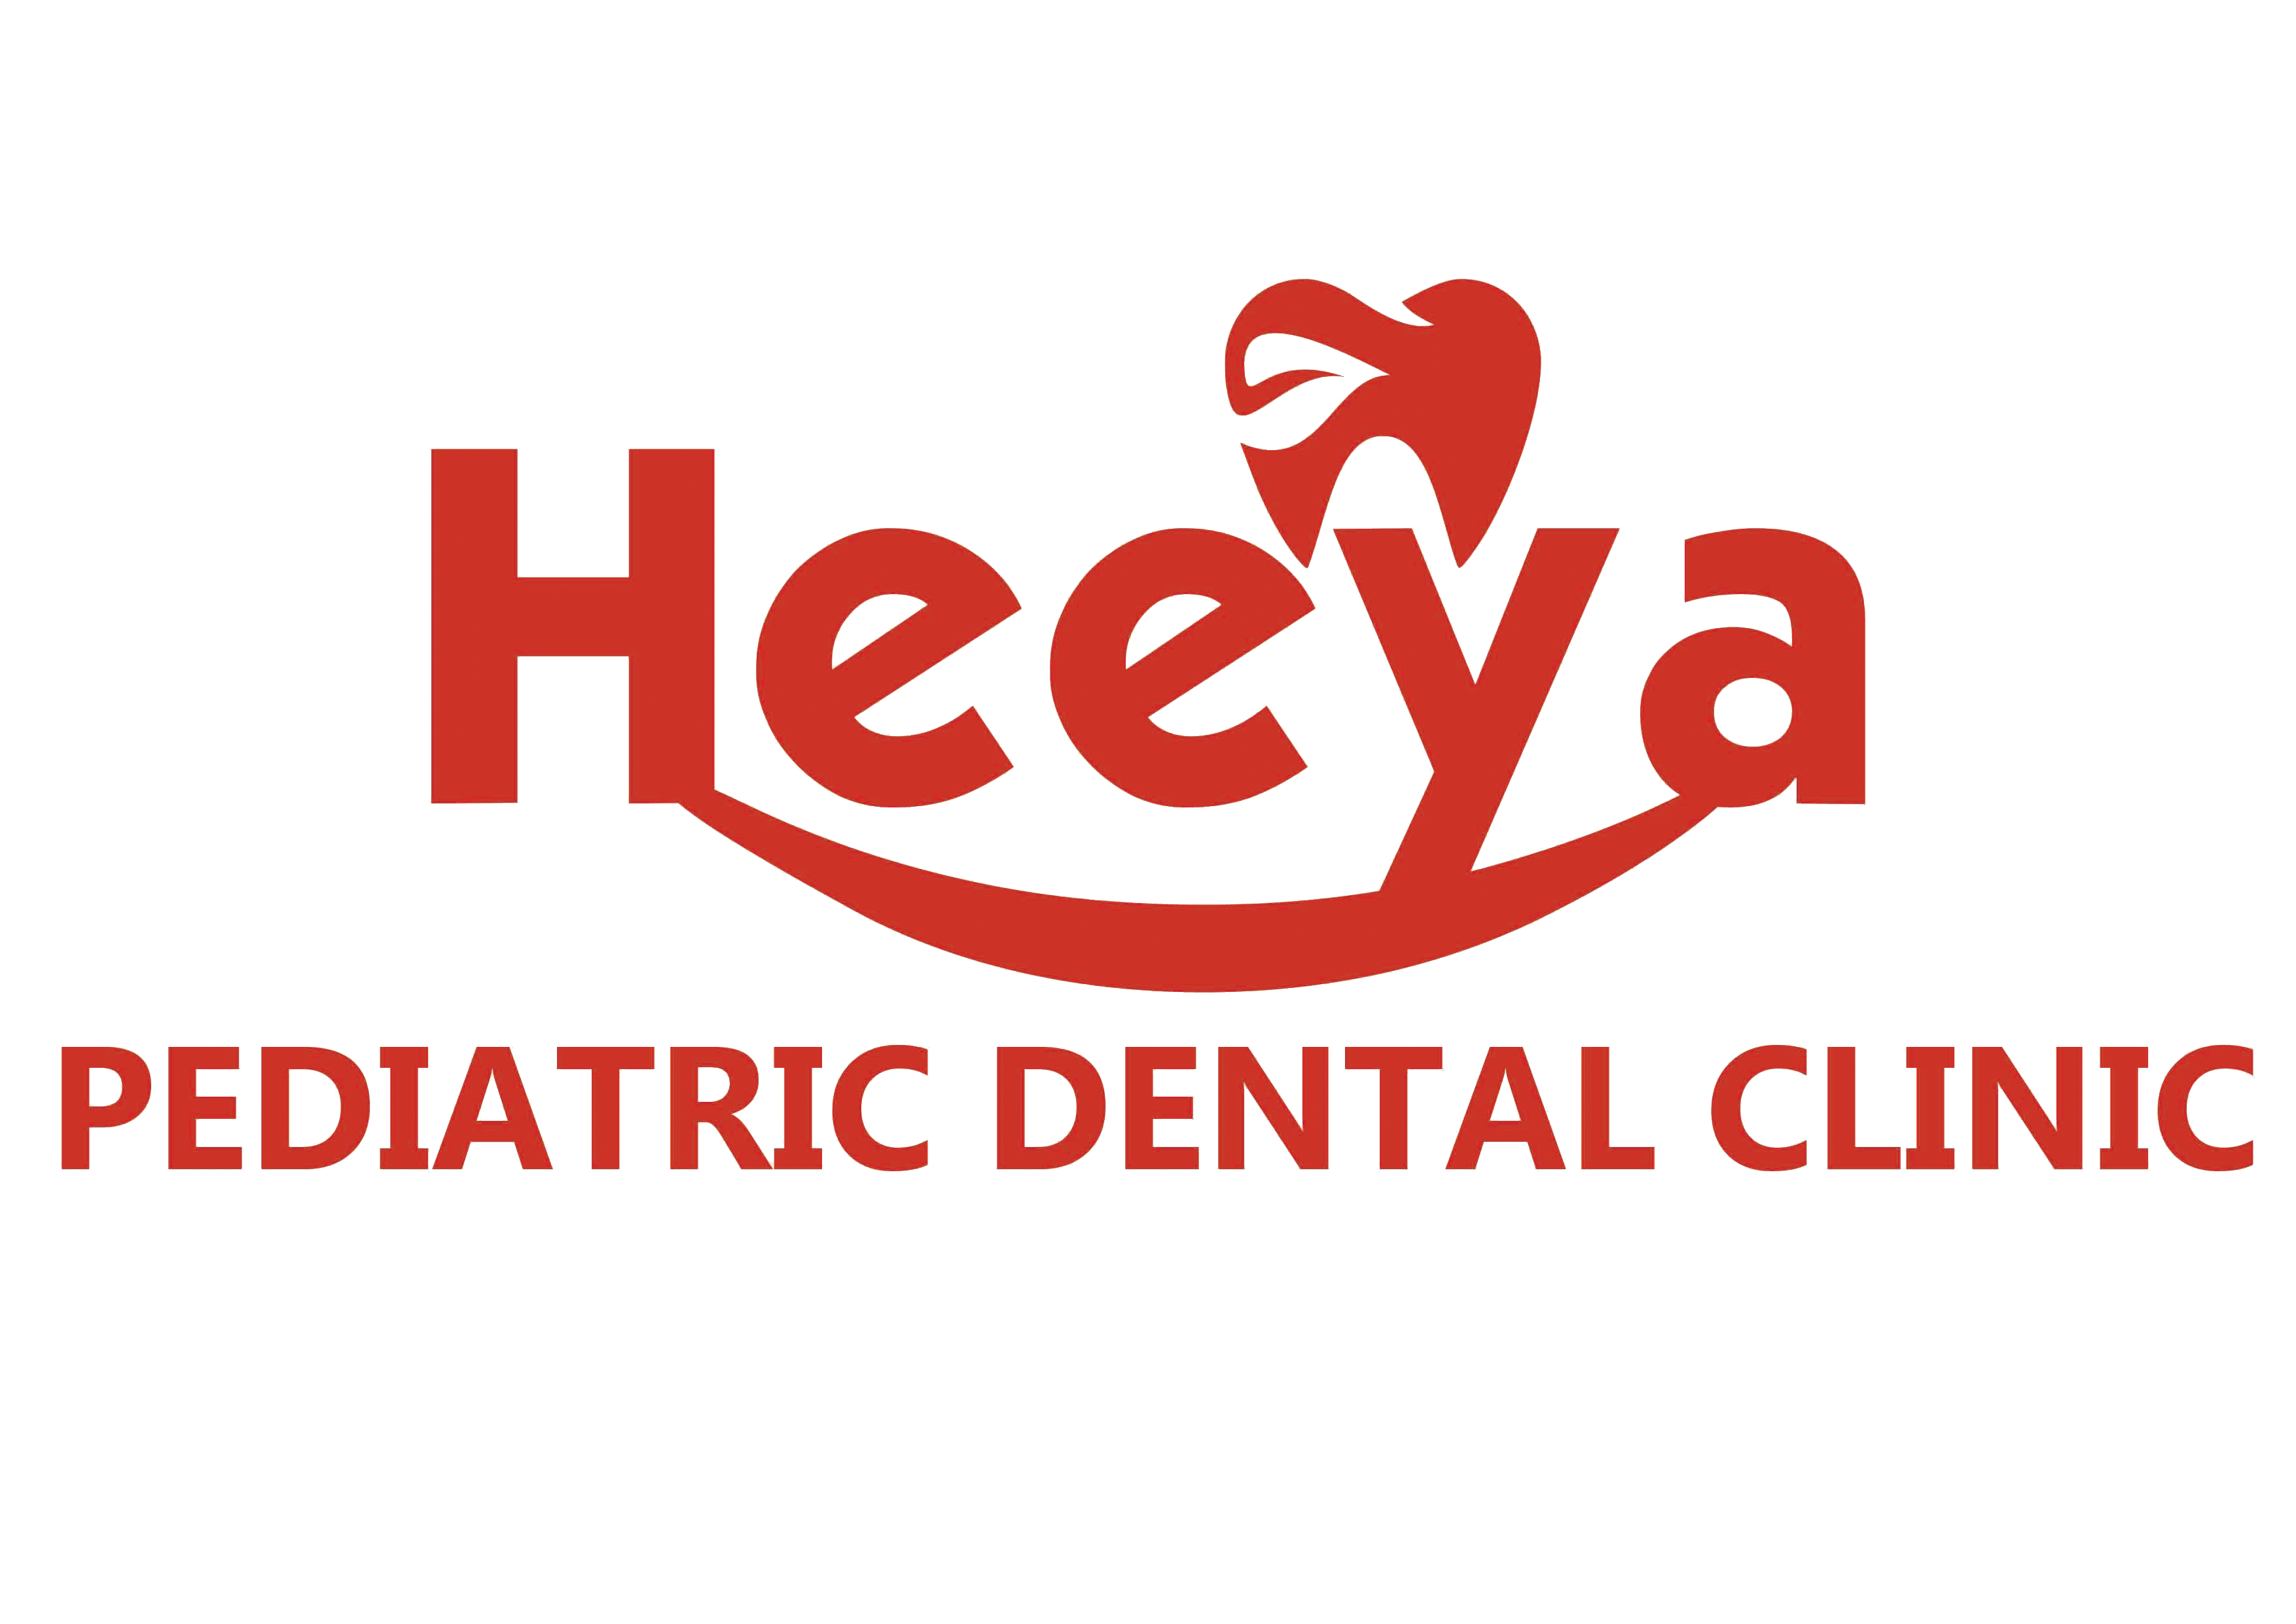 Heeya Pediatric Dental Clinic|Healthcare|Medical Services